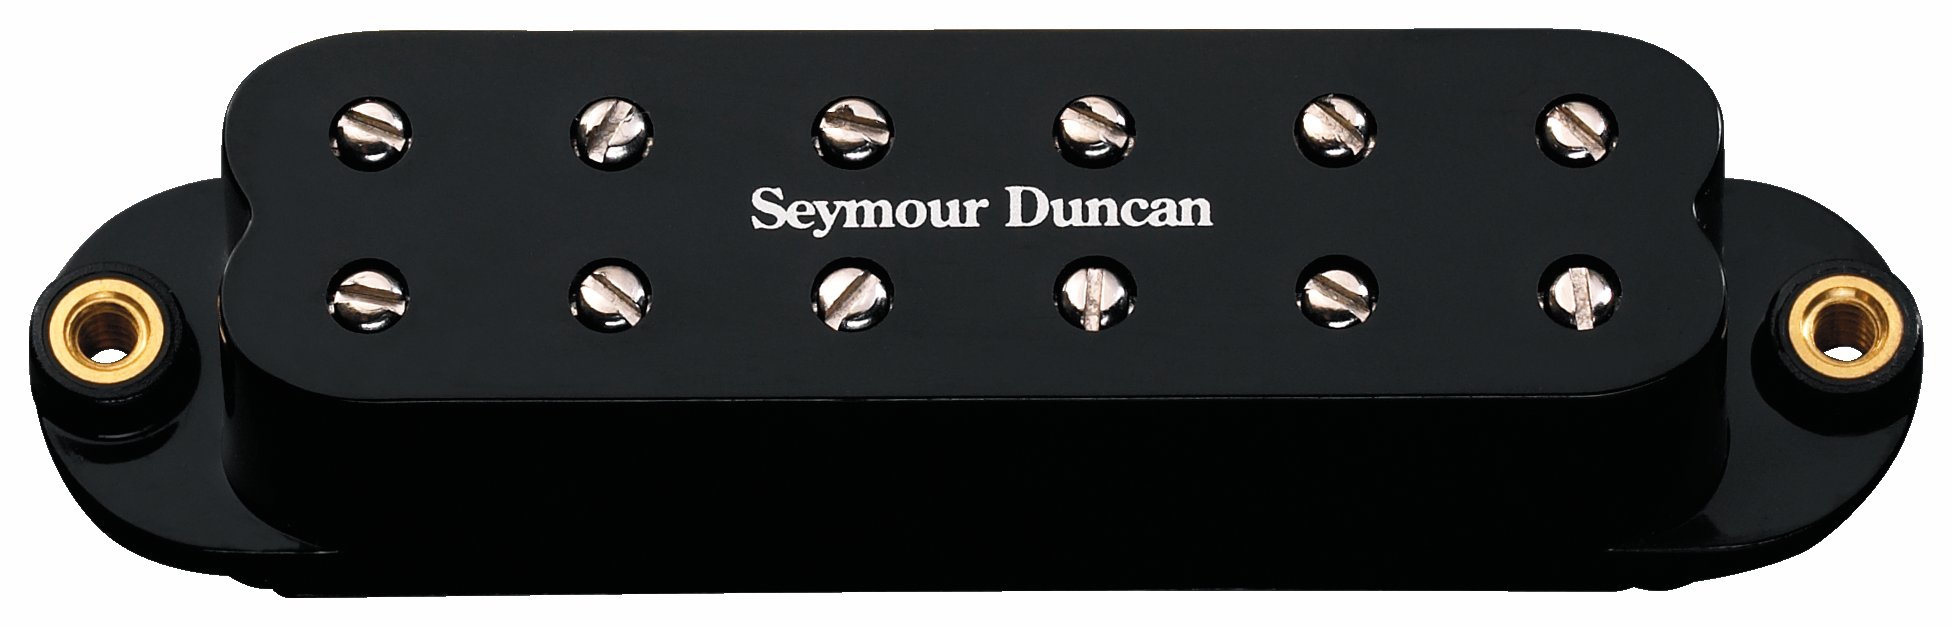 Seymour Duncan SL59-1B - Little '59 Strat, Bridge Pickup - Black